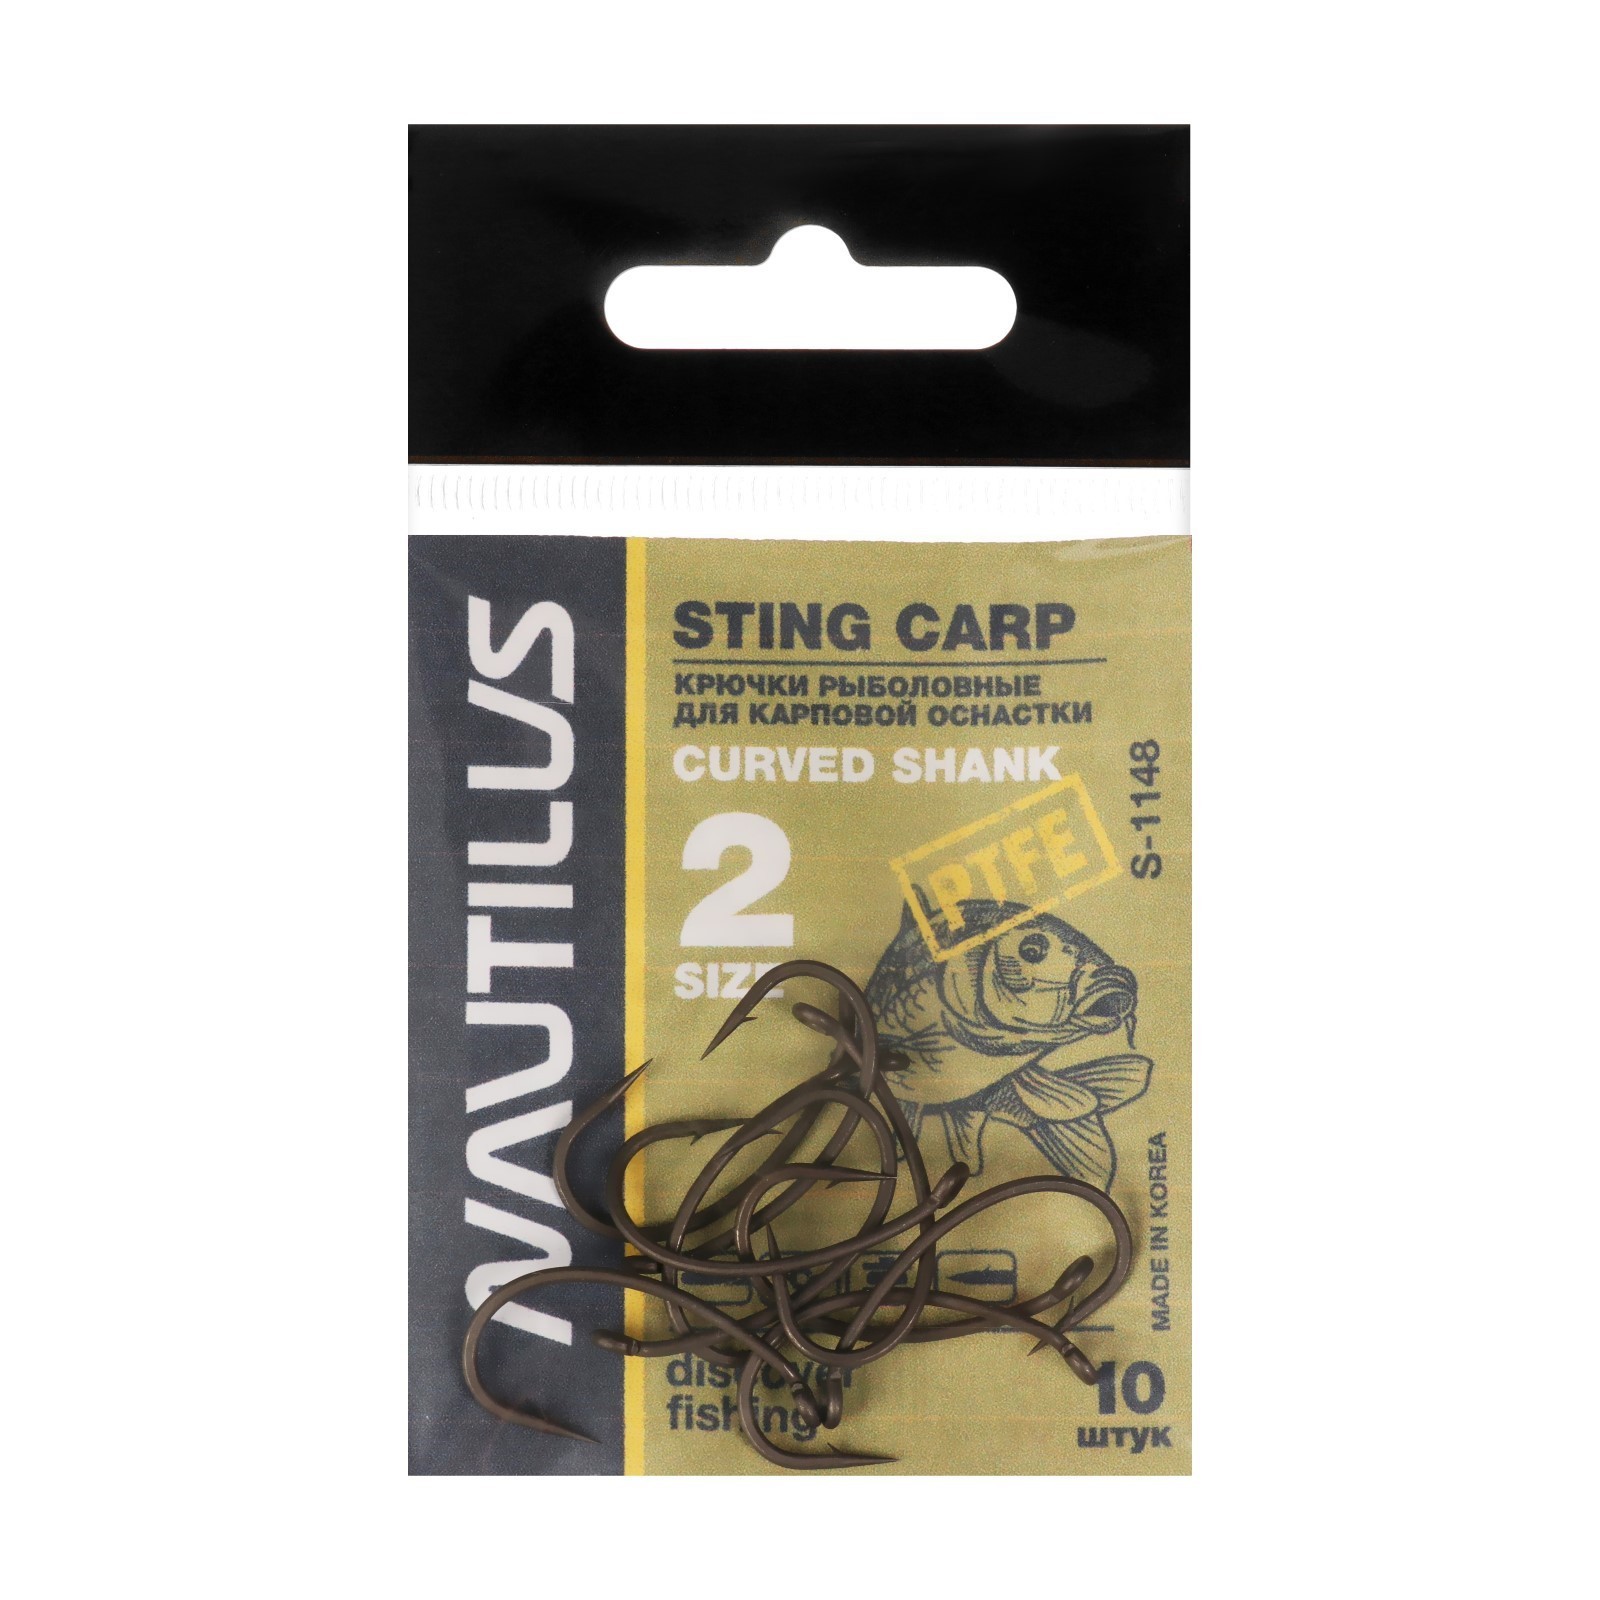 Крючки Nautilus STING CARP CURVED SHANK S-1148 BN № 02 (10шт)